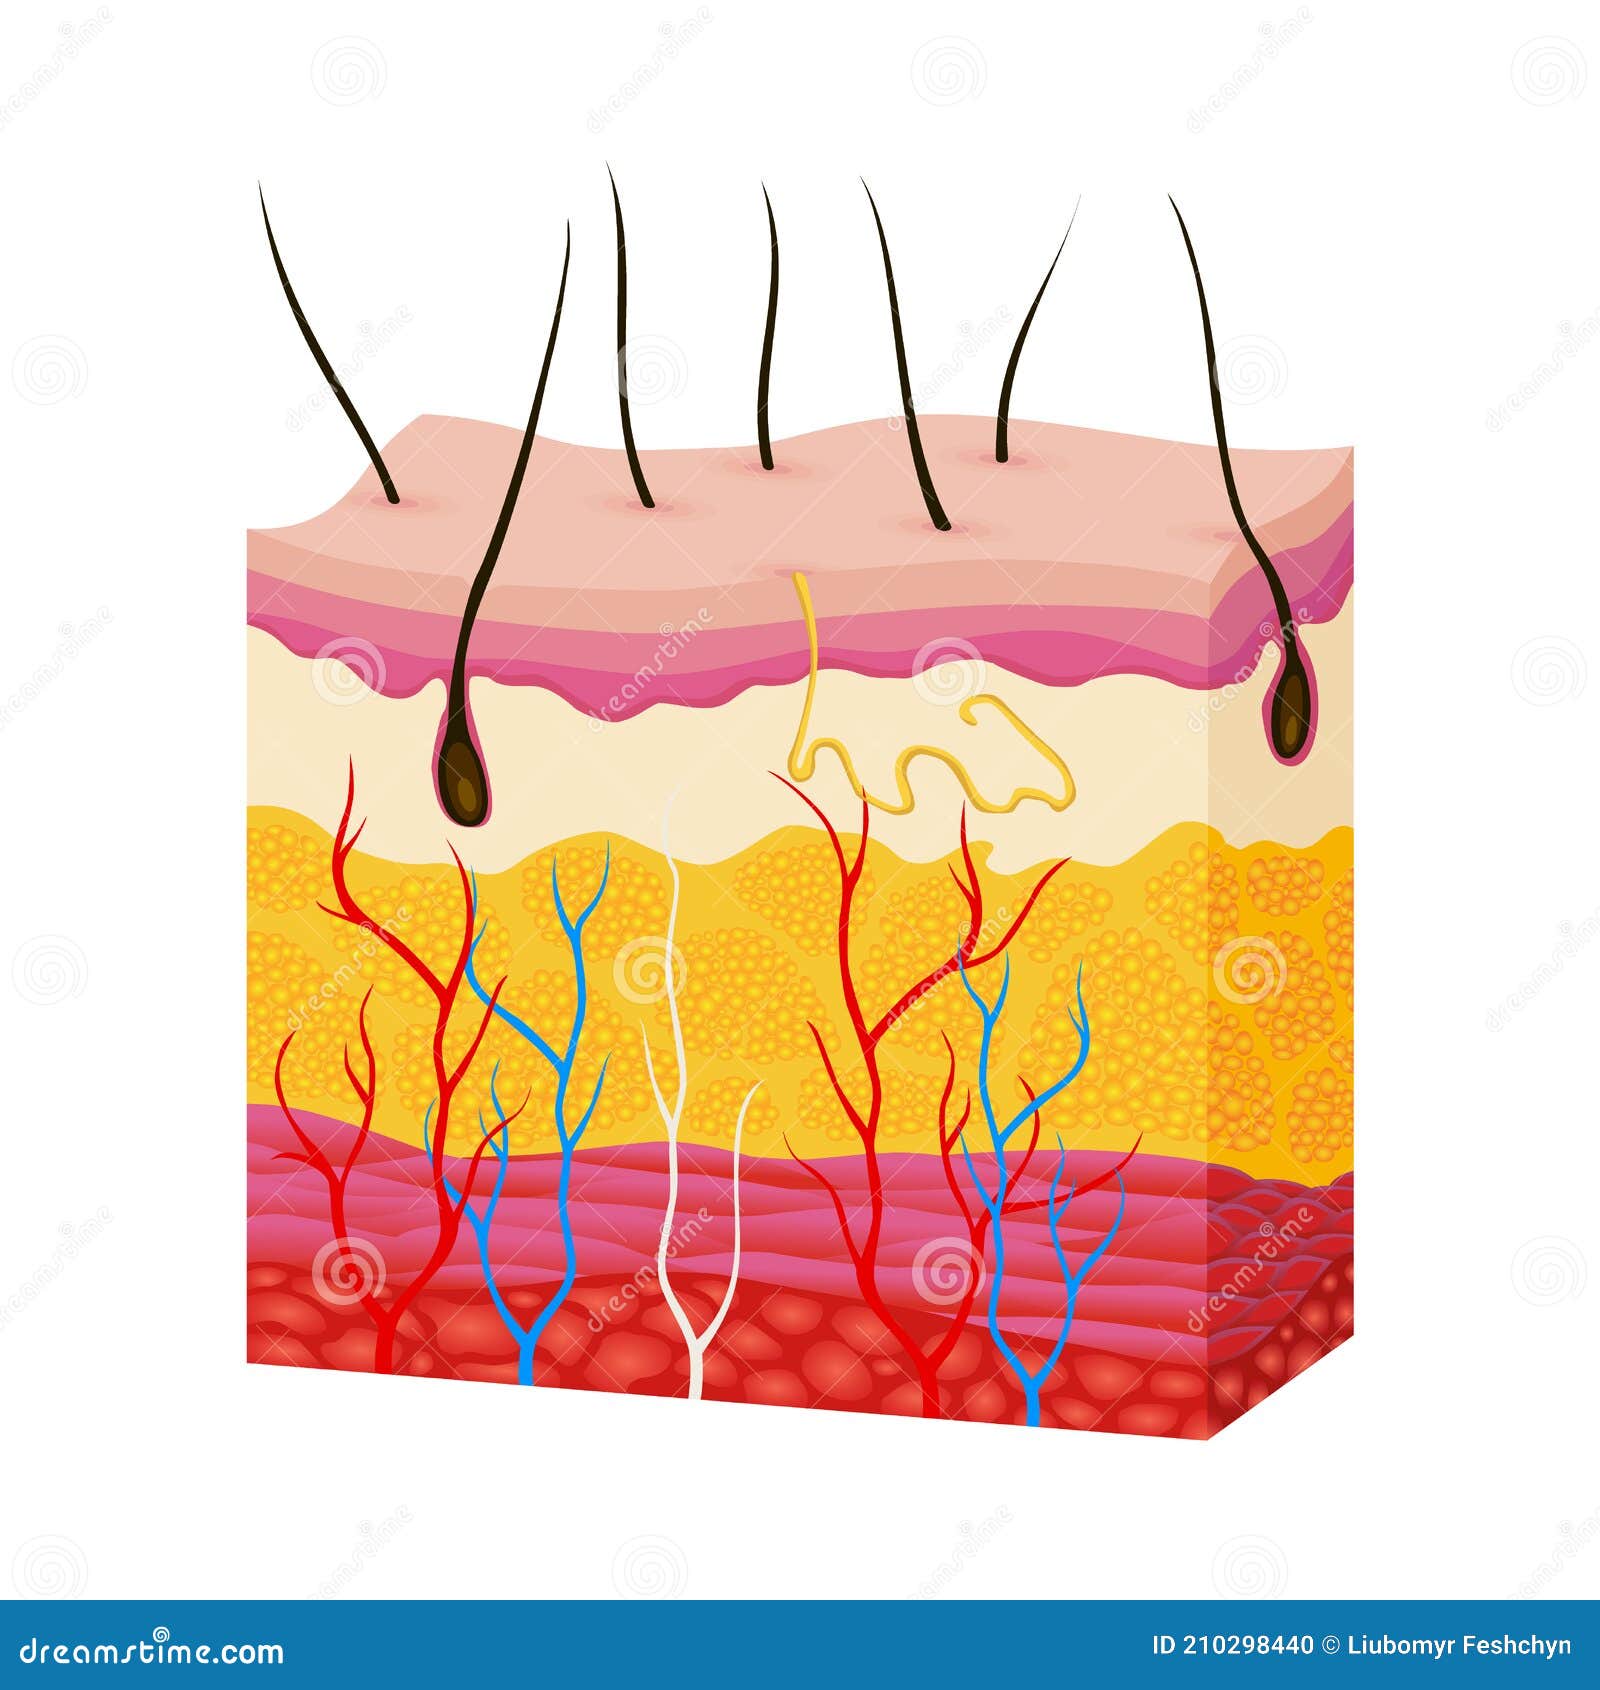 skin anatomy. human body skin   with parts vein artery hair sweat gland epidermis dermis and